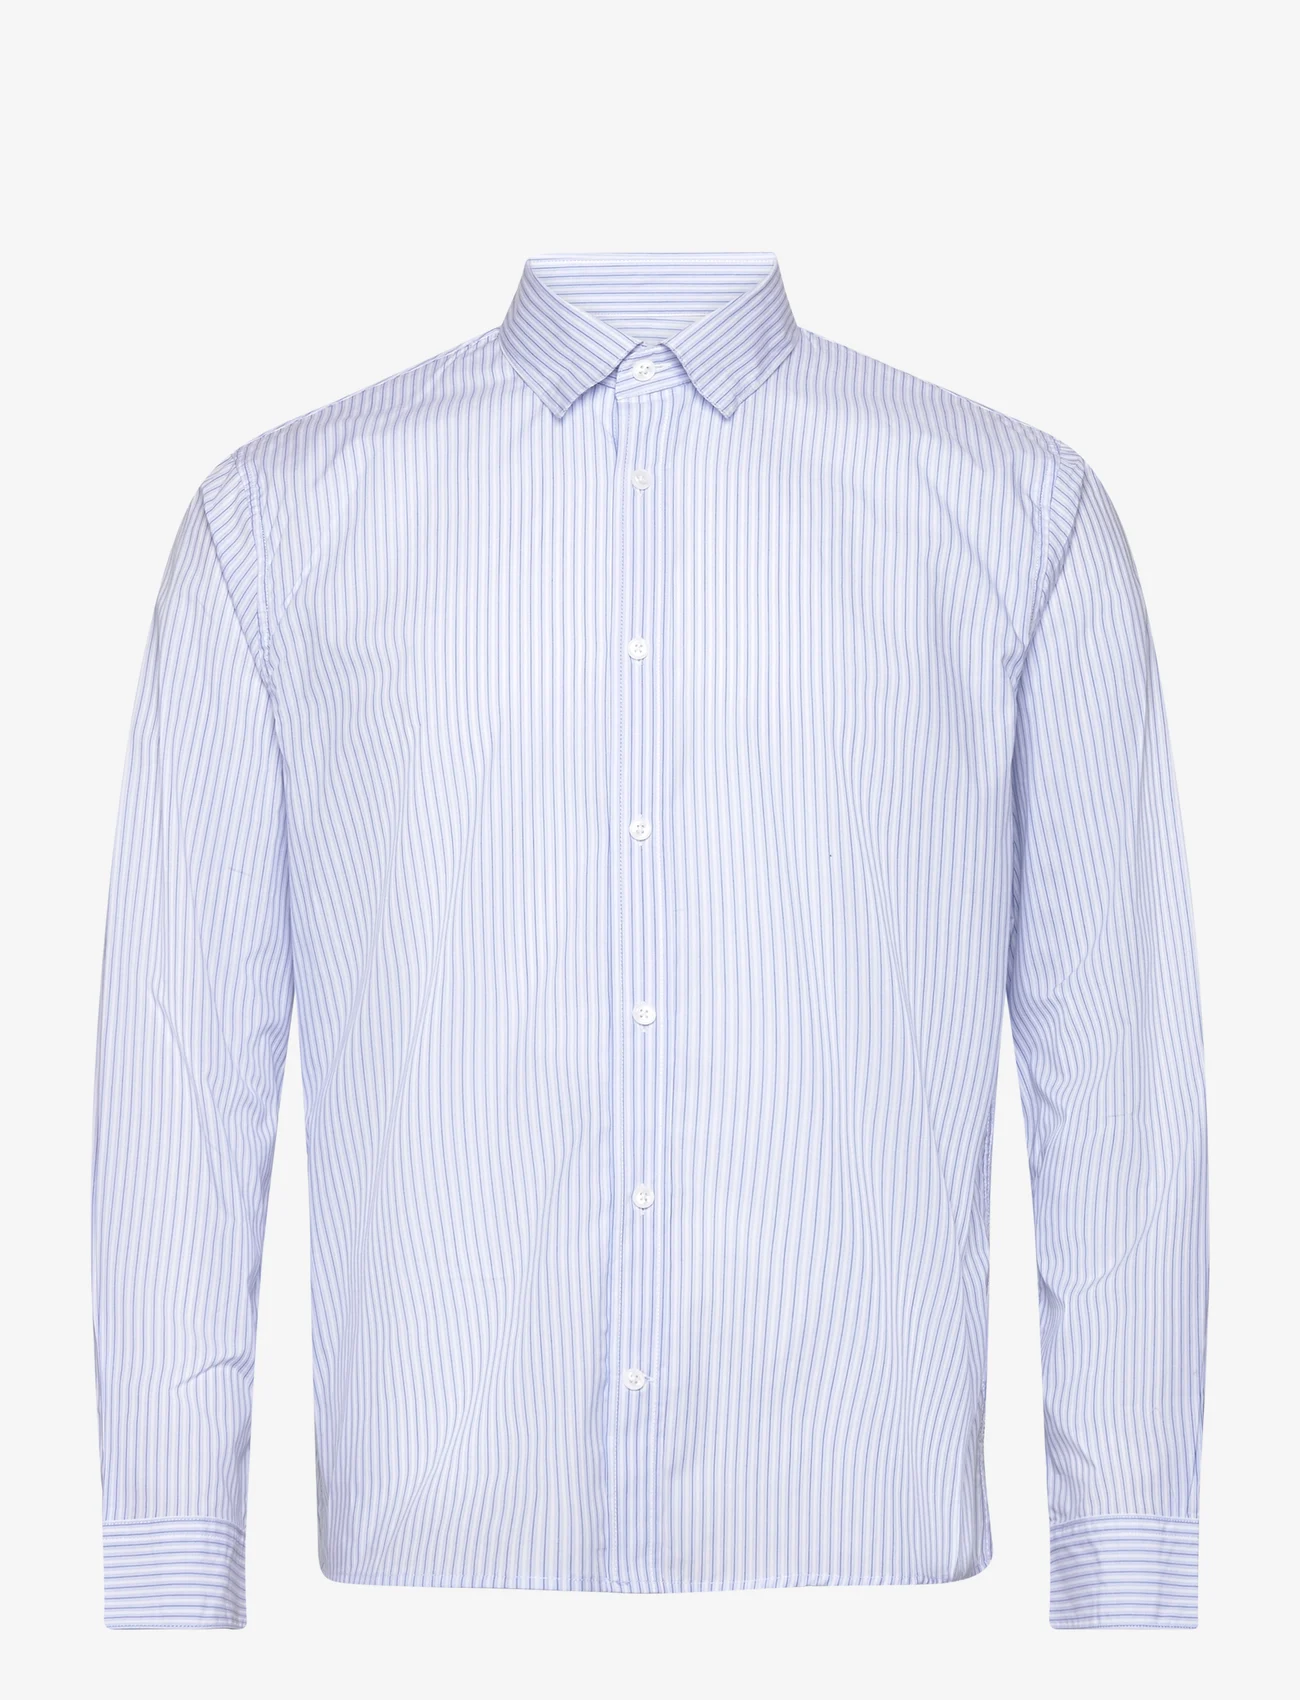 Matinique - MAChristaldo - business skjorter - chambray blue - 0